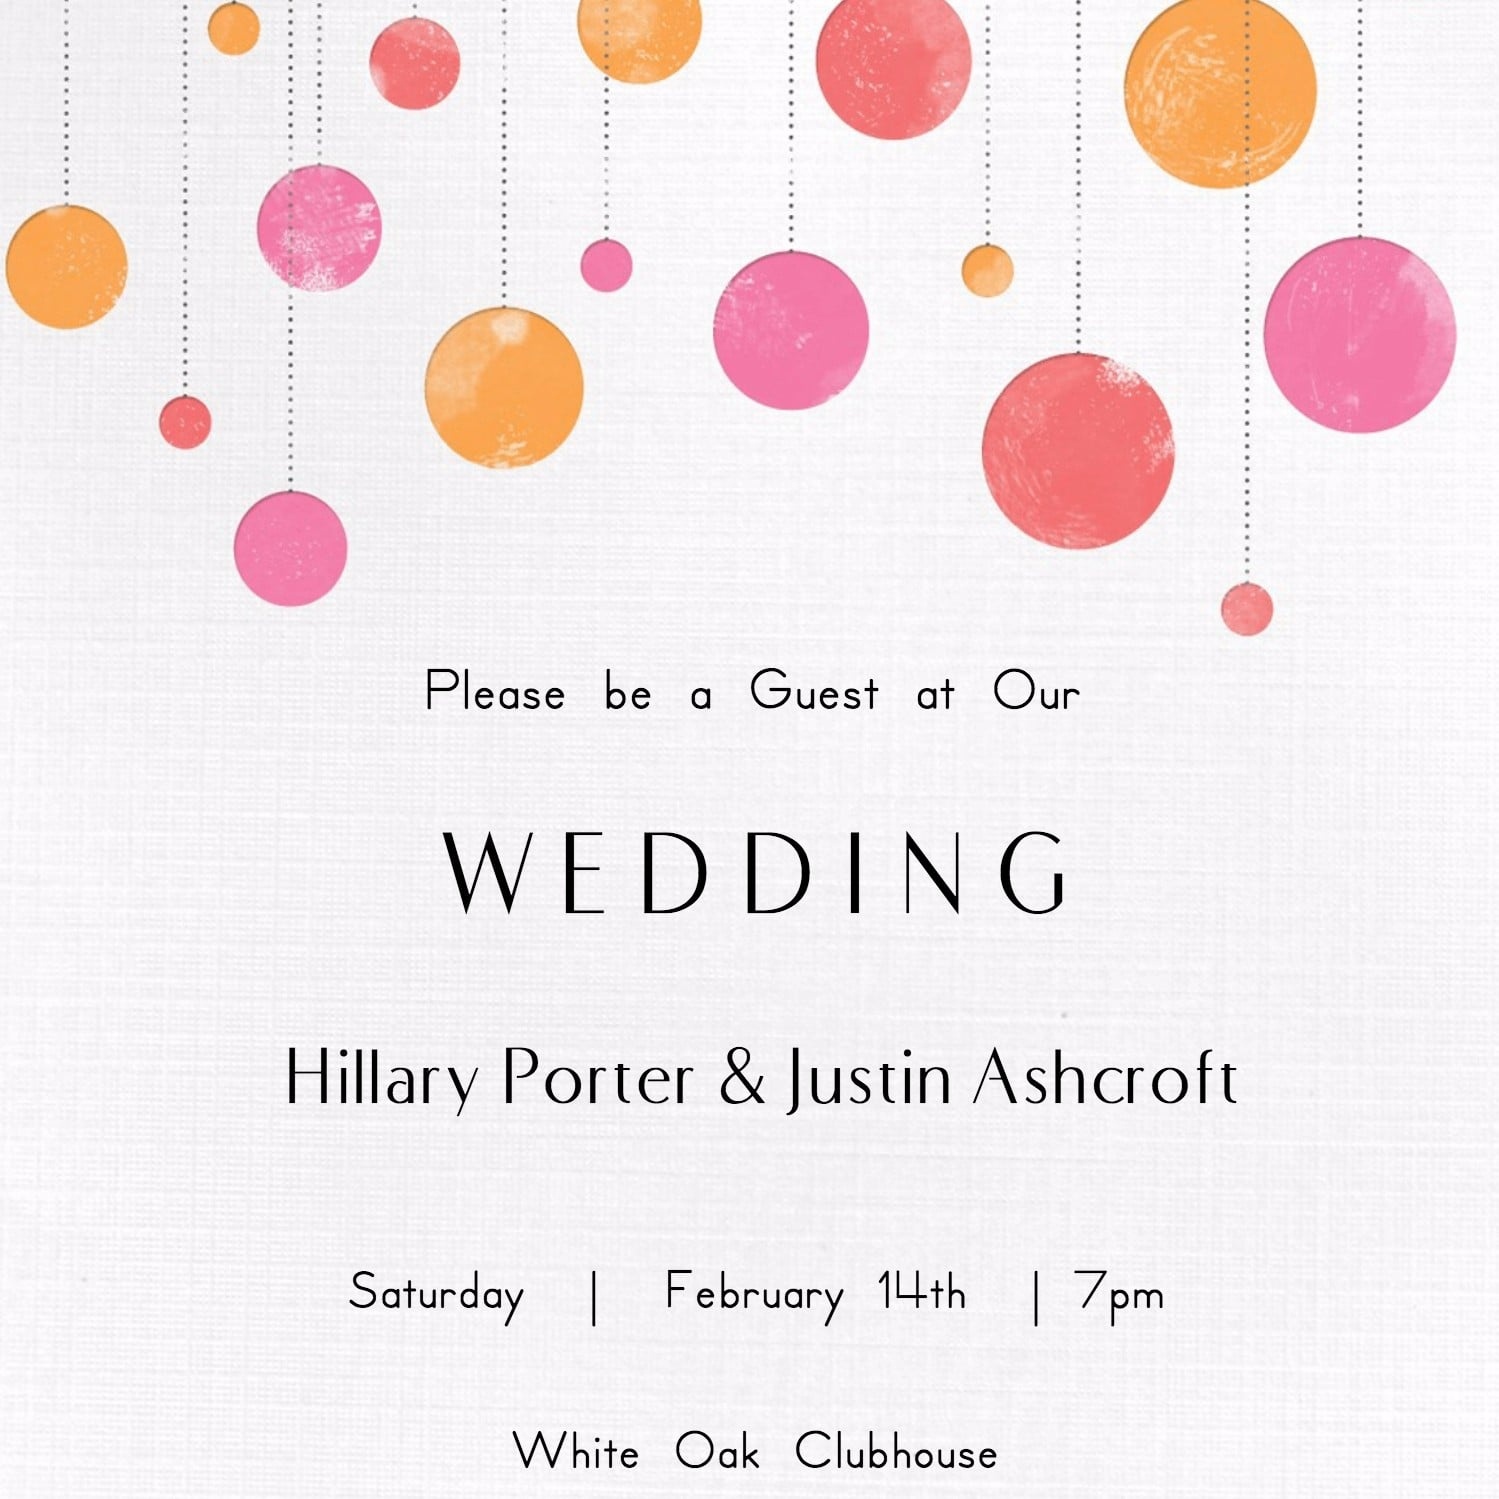 Free Printable Wedding Invitations | Popsugar Smart Living - Free Printable Wedding Invitations